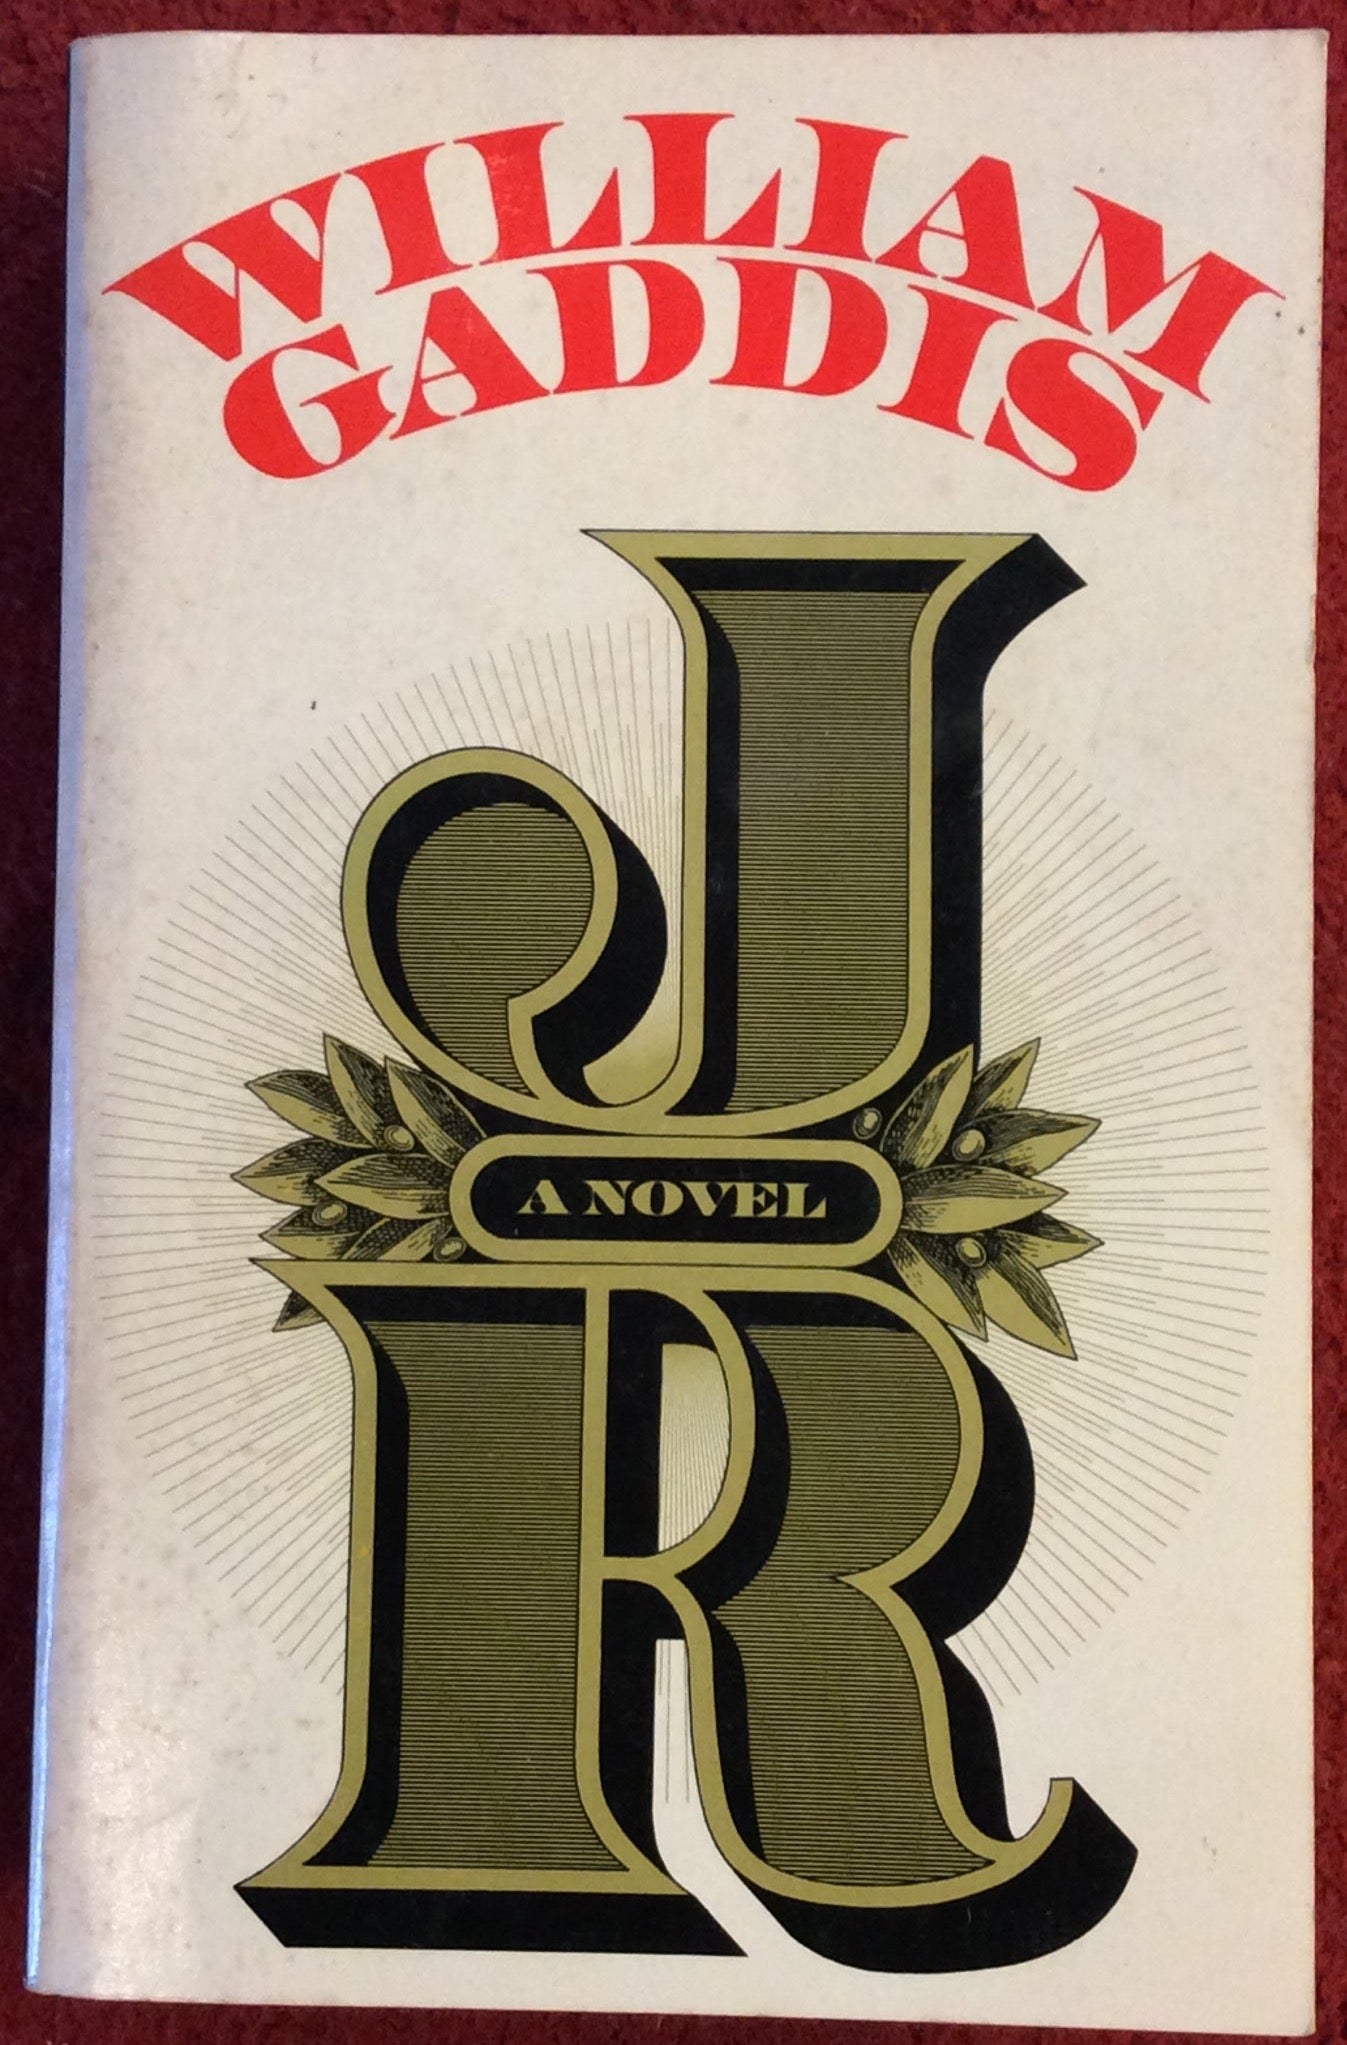 JR, William Gaddis, 1975, Knopf *